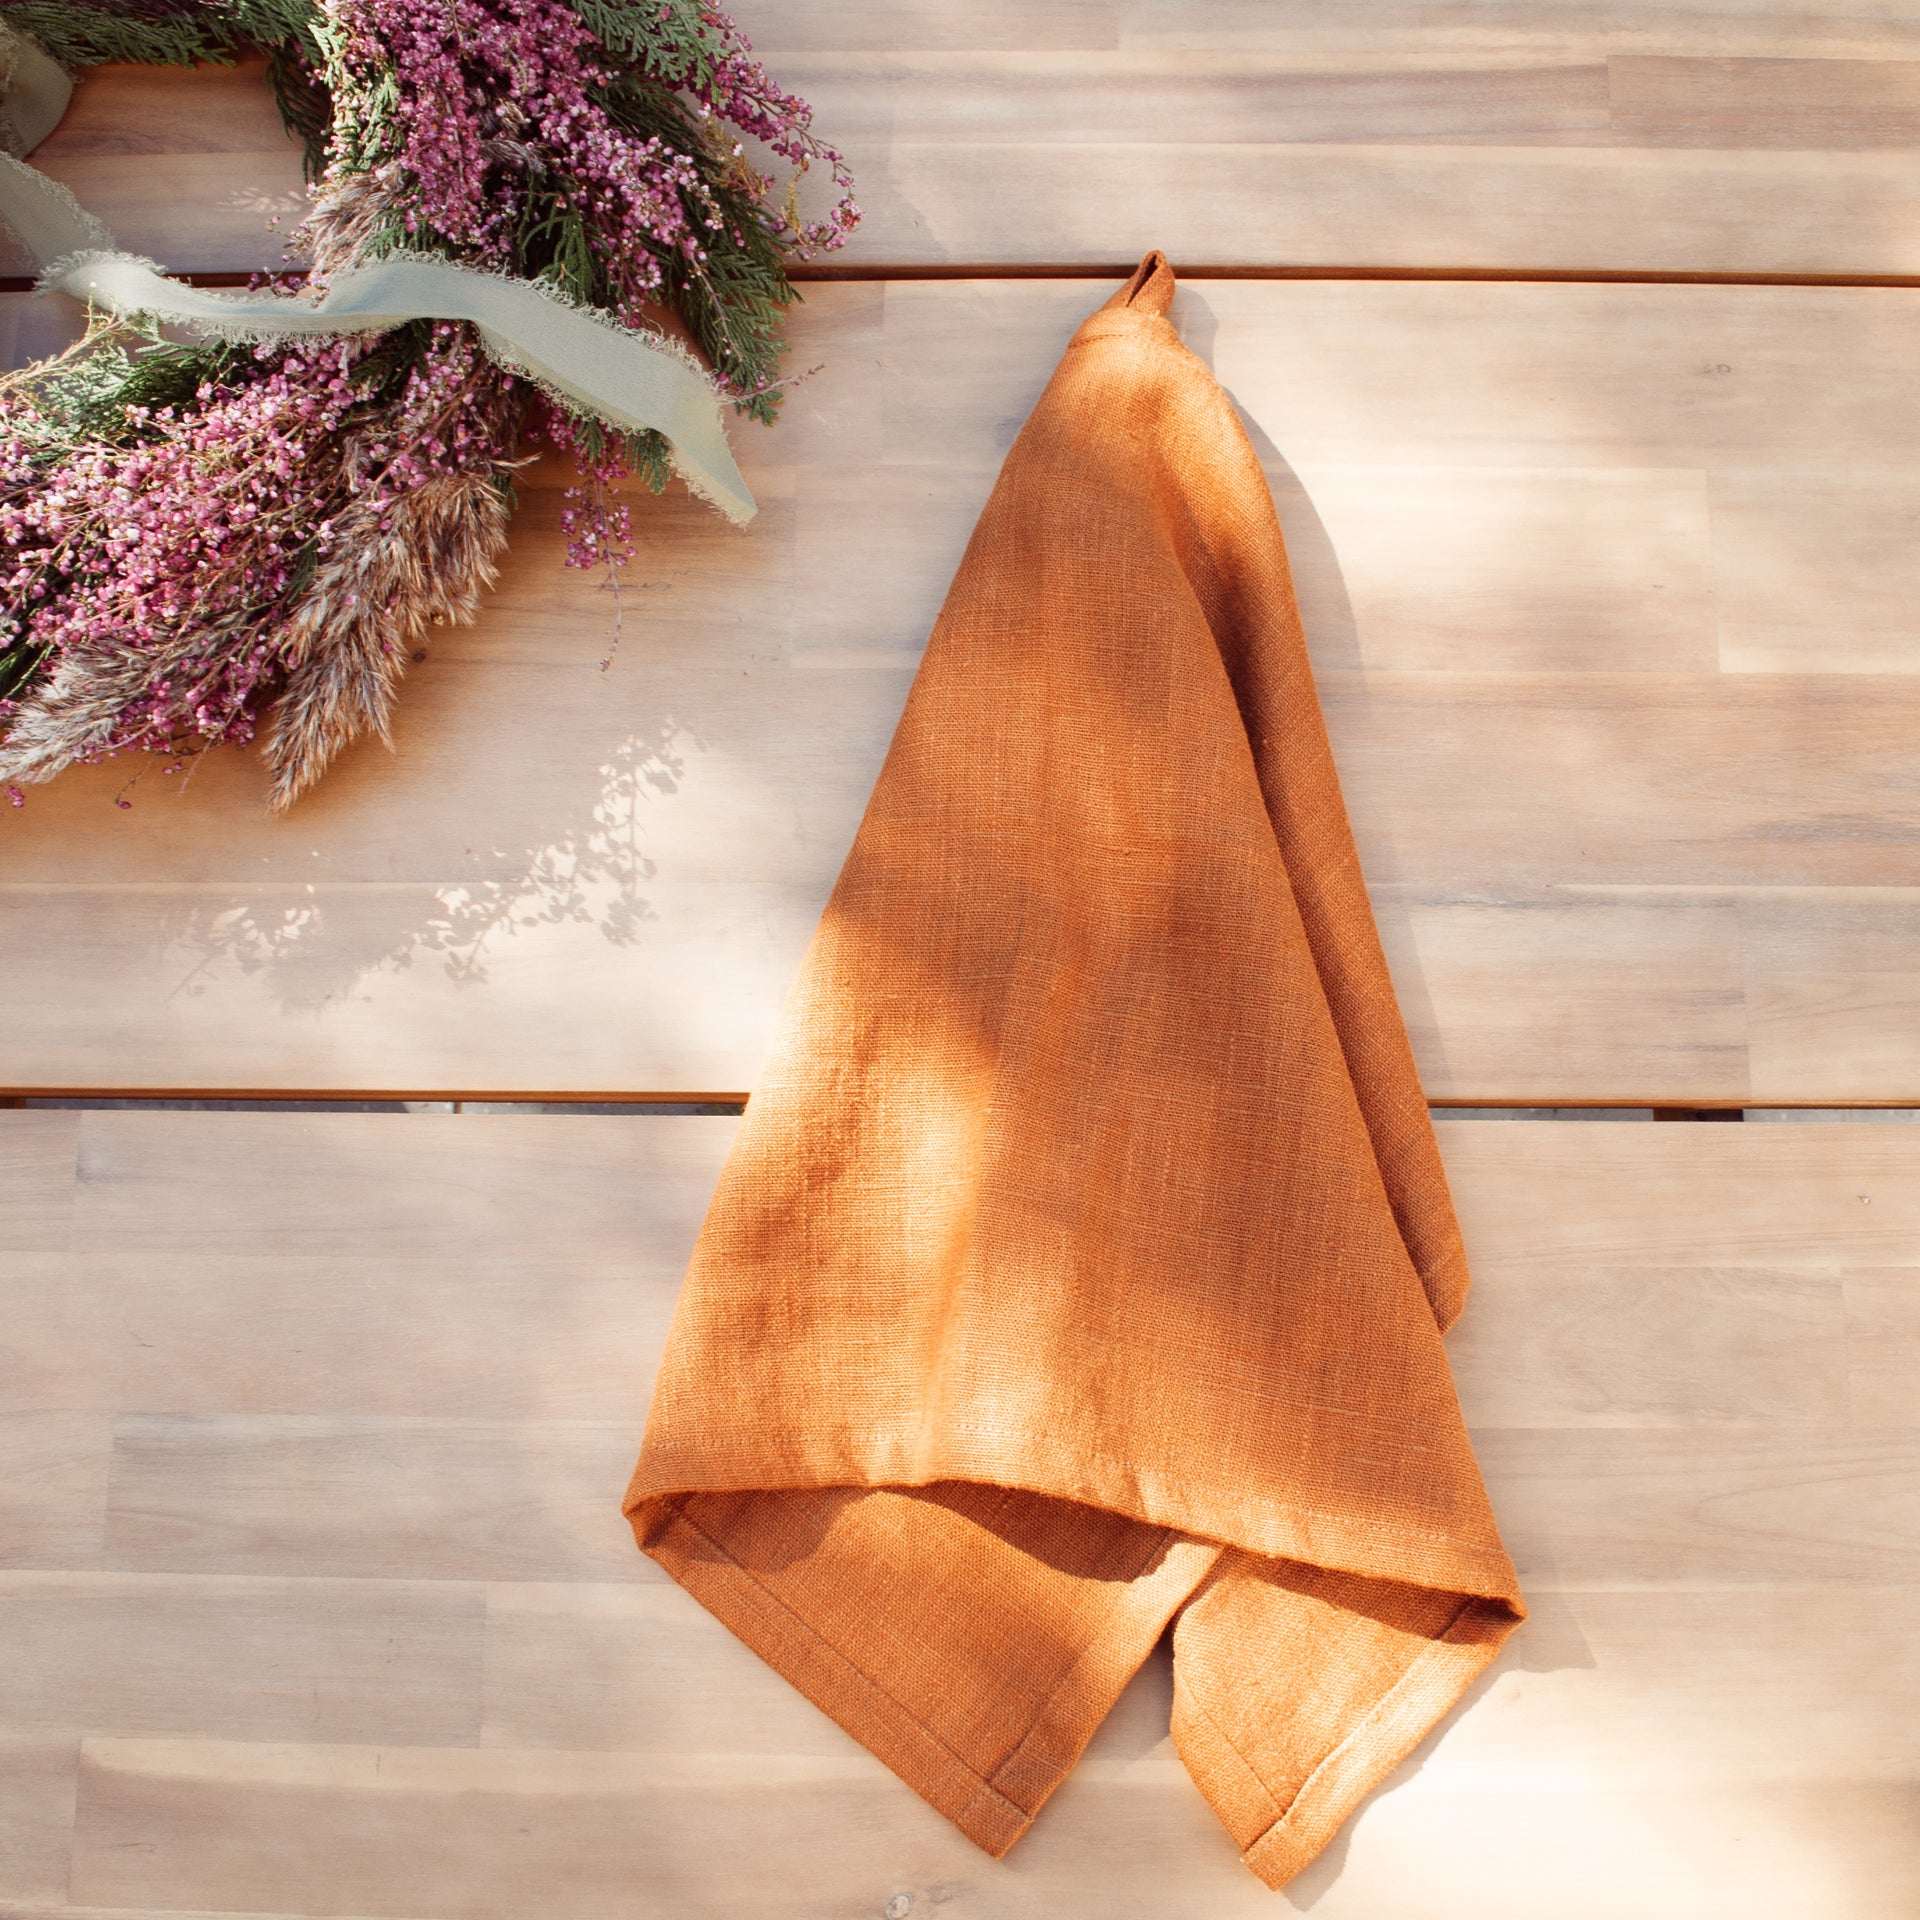 ORANGE DECOR European Linen Dish Towels - Exclusive Designs Tea Towels -  Elegant 100% Linen Orange Kitchen Towels - Fruits Vegetables Lovers